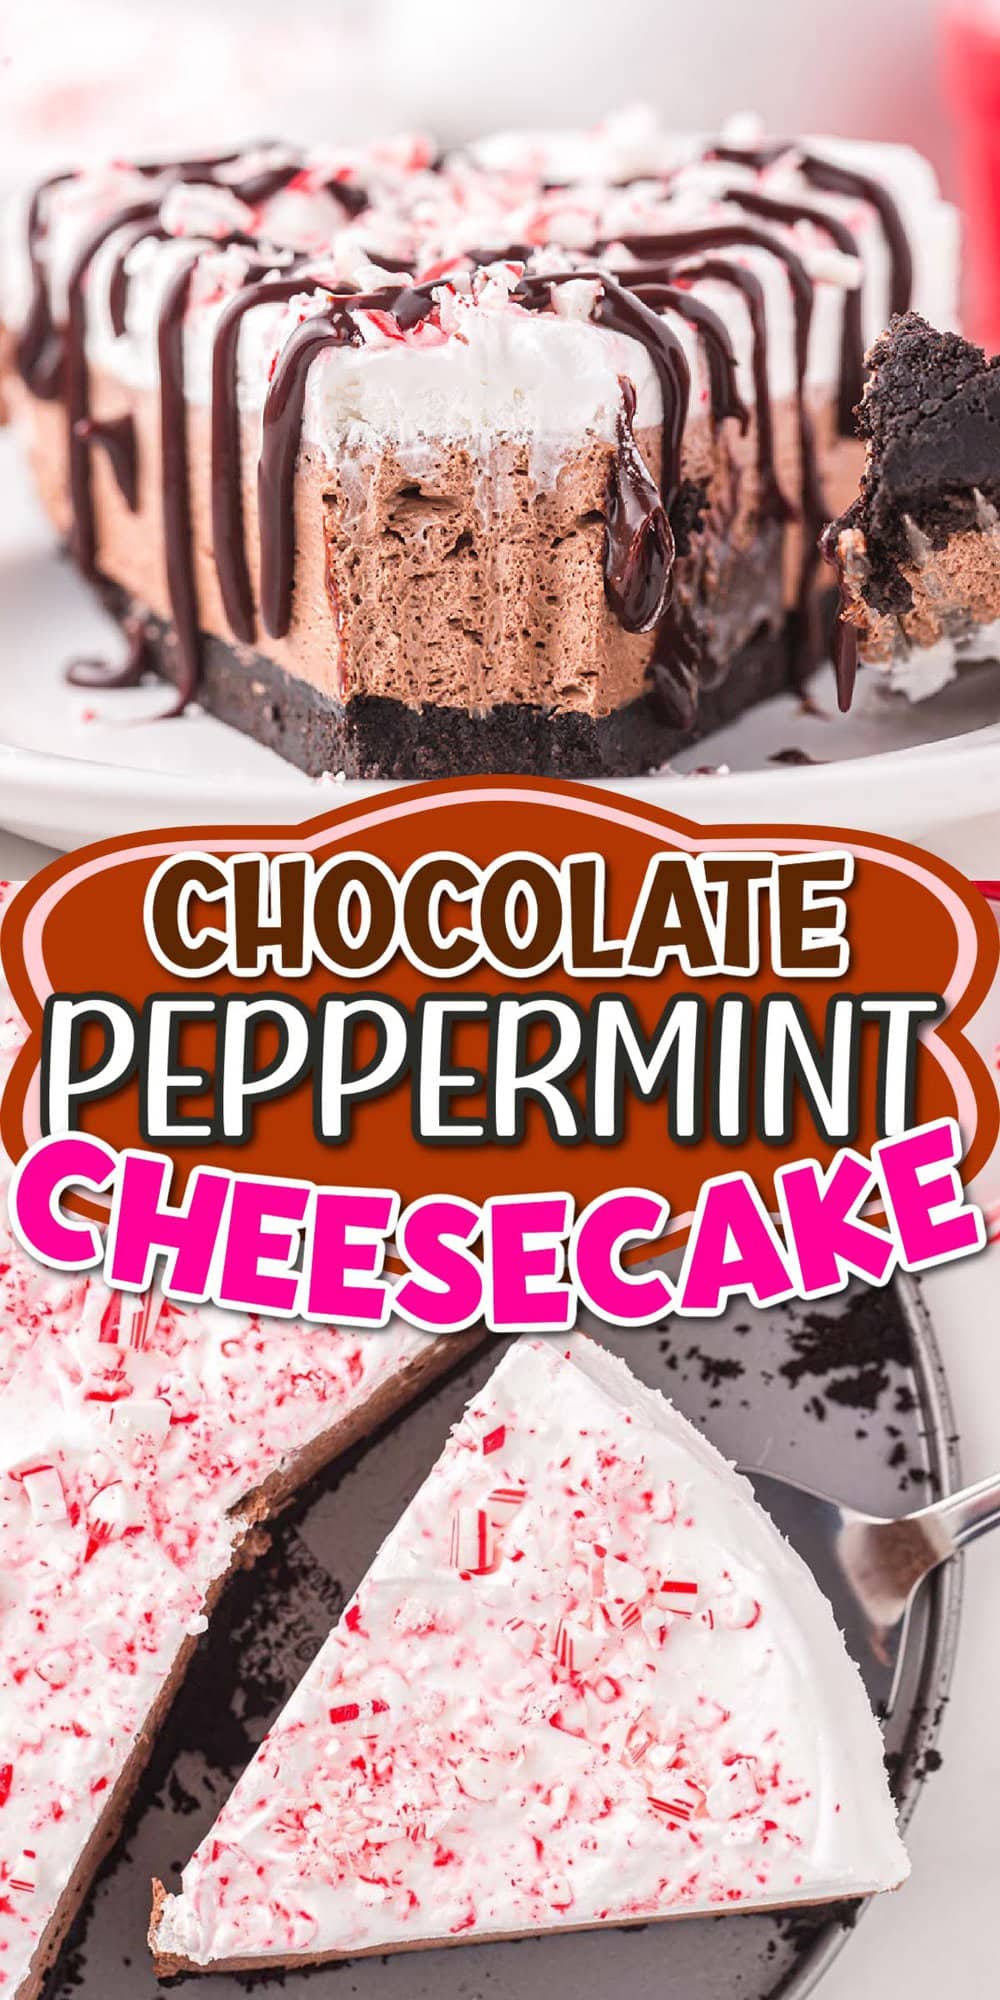 Chocolate Peppermint Cheesecake pinterest